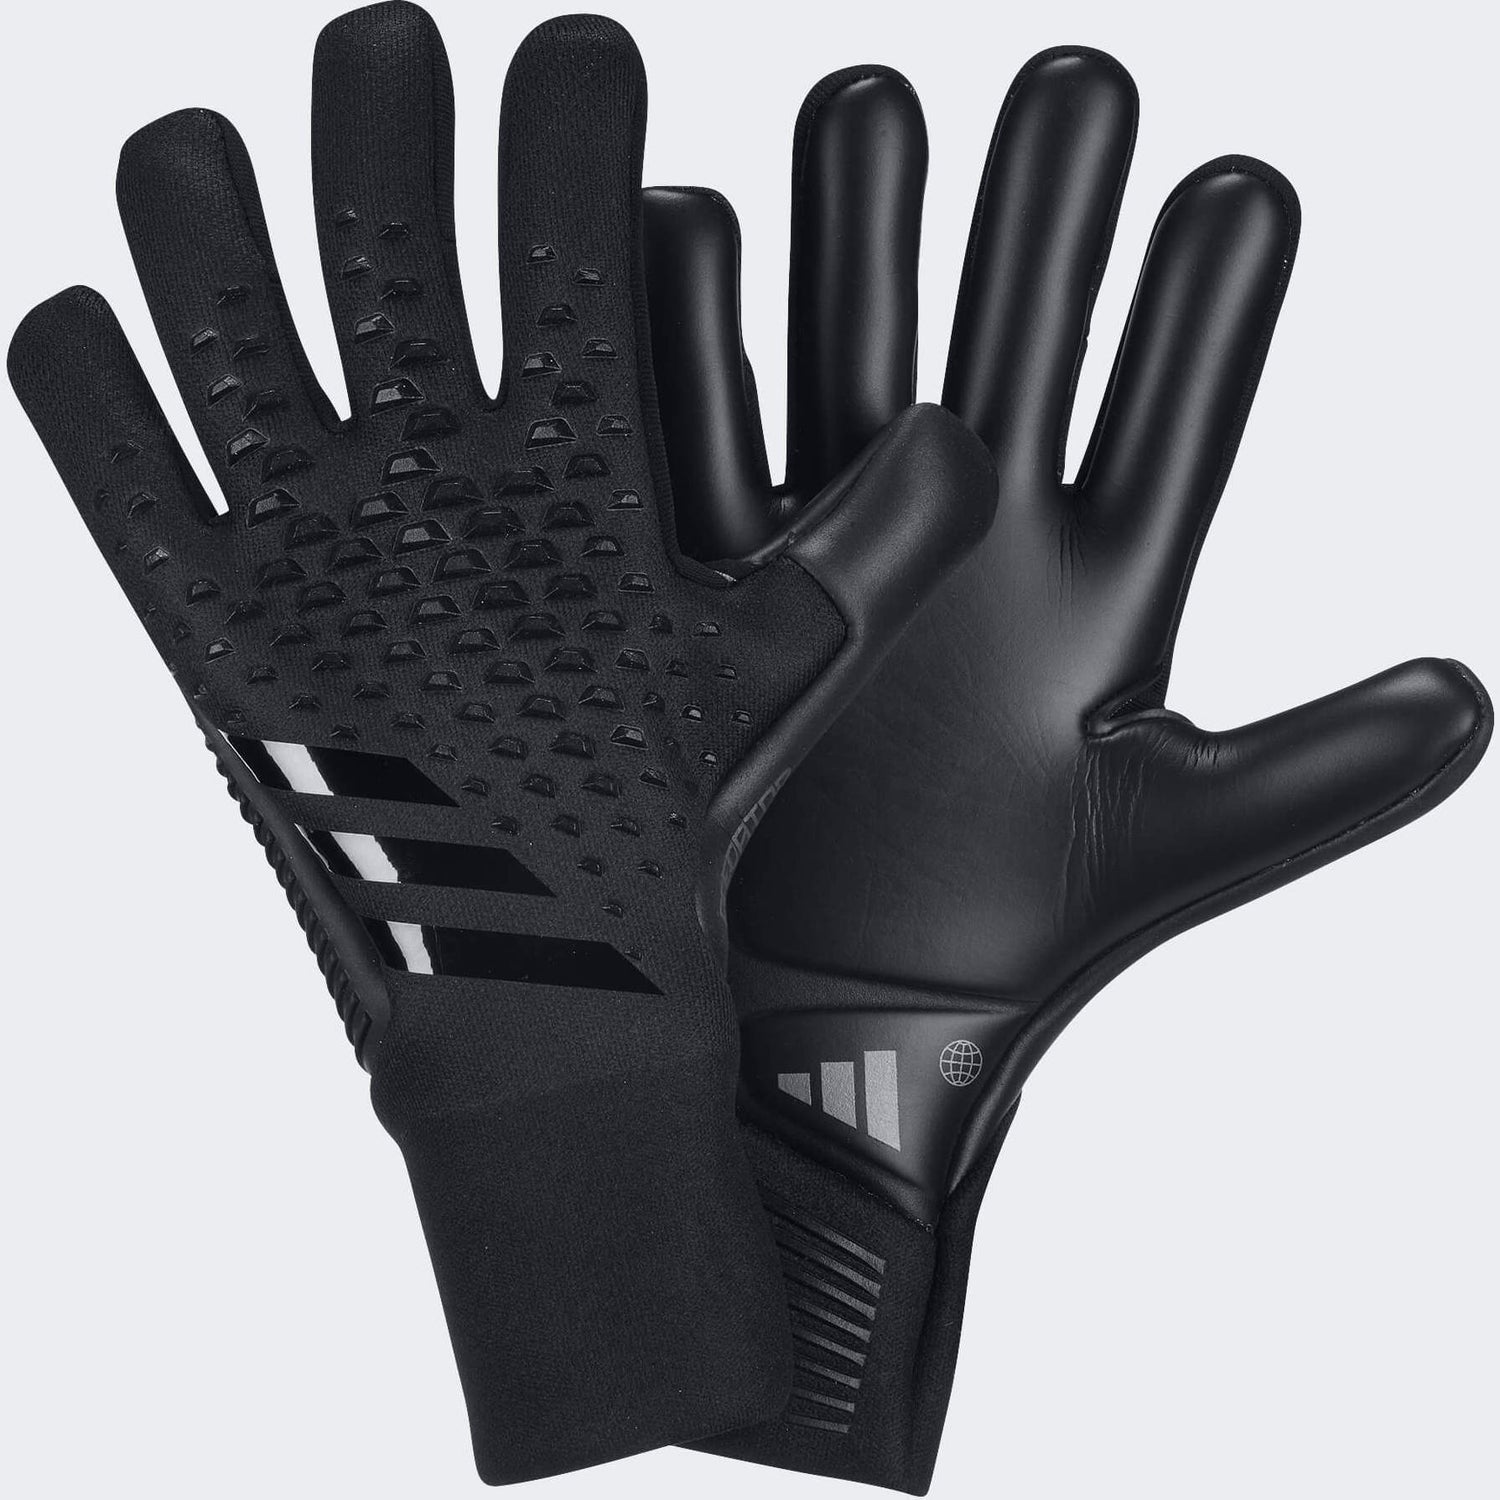 adidas Predator GL Pro Goalkeeper Gloves - Black (Set)